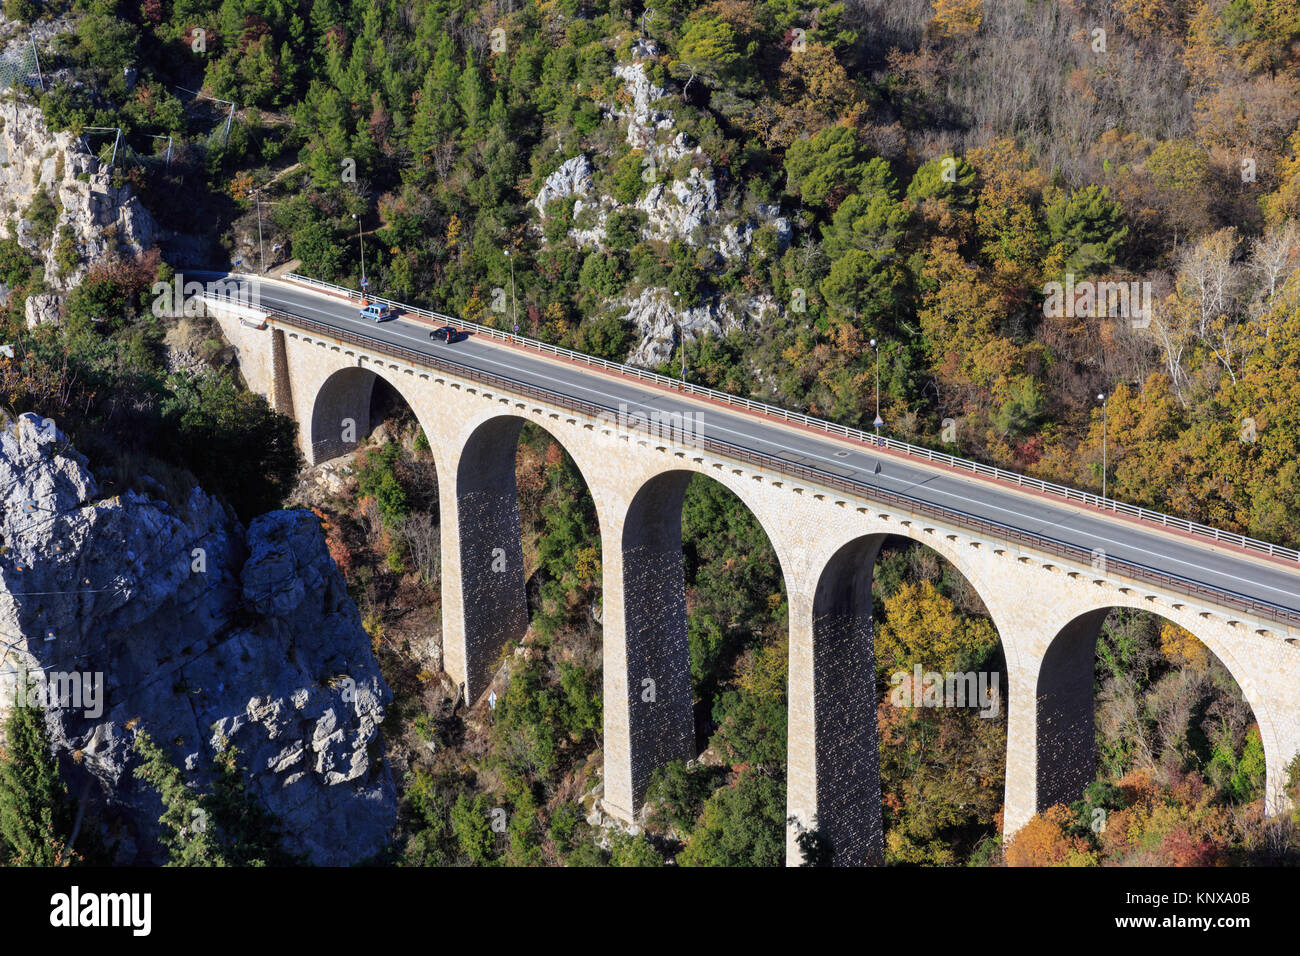 The Devils Bridge near Eze, stone masonry arched bridge viewed from above, Alpes-Maritimes department , Cote d'Azur, France Stock Photo